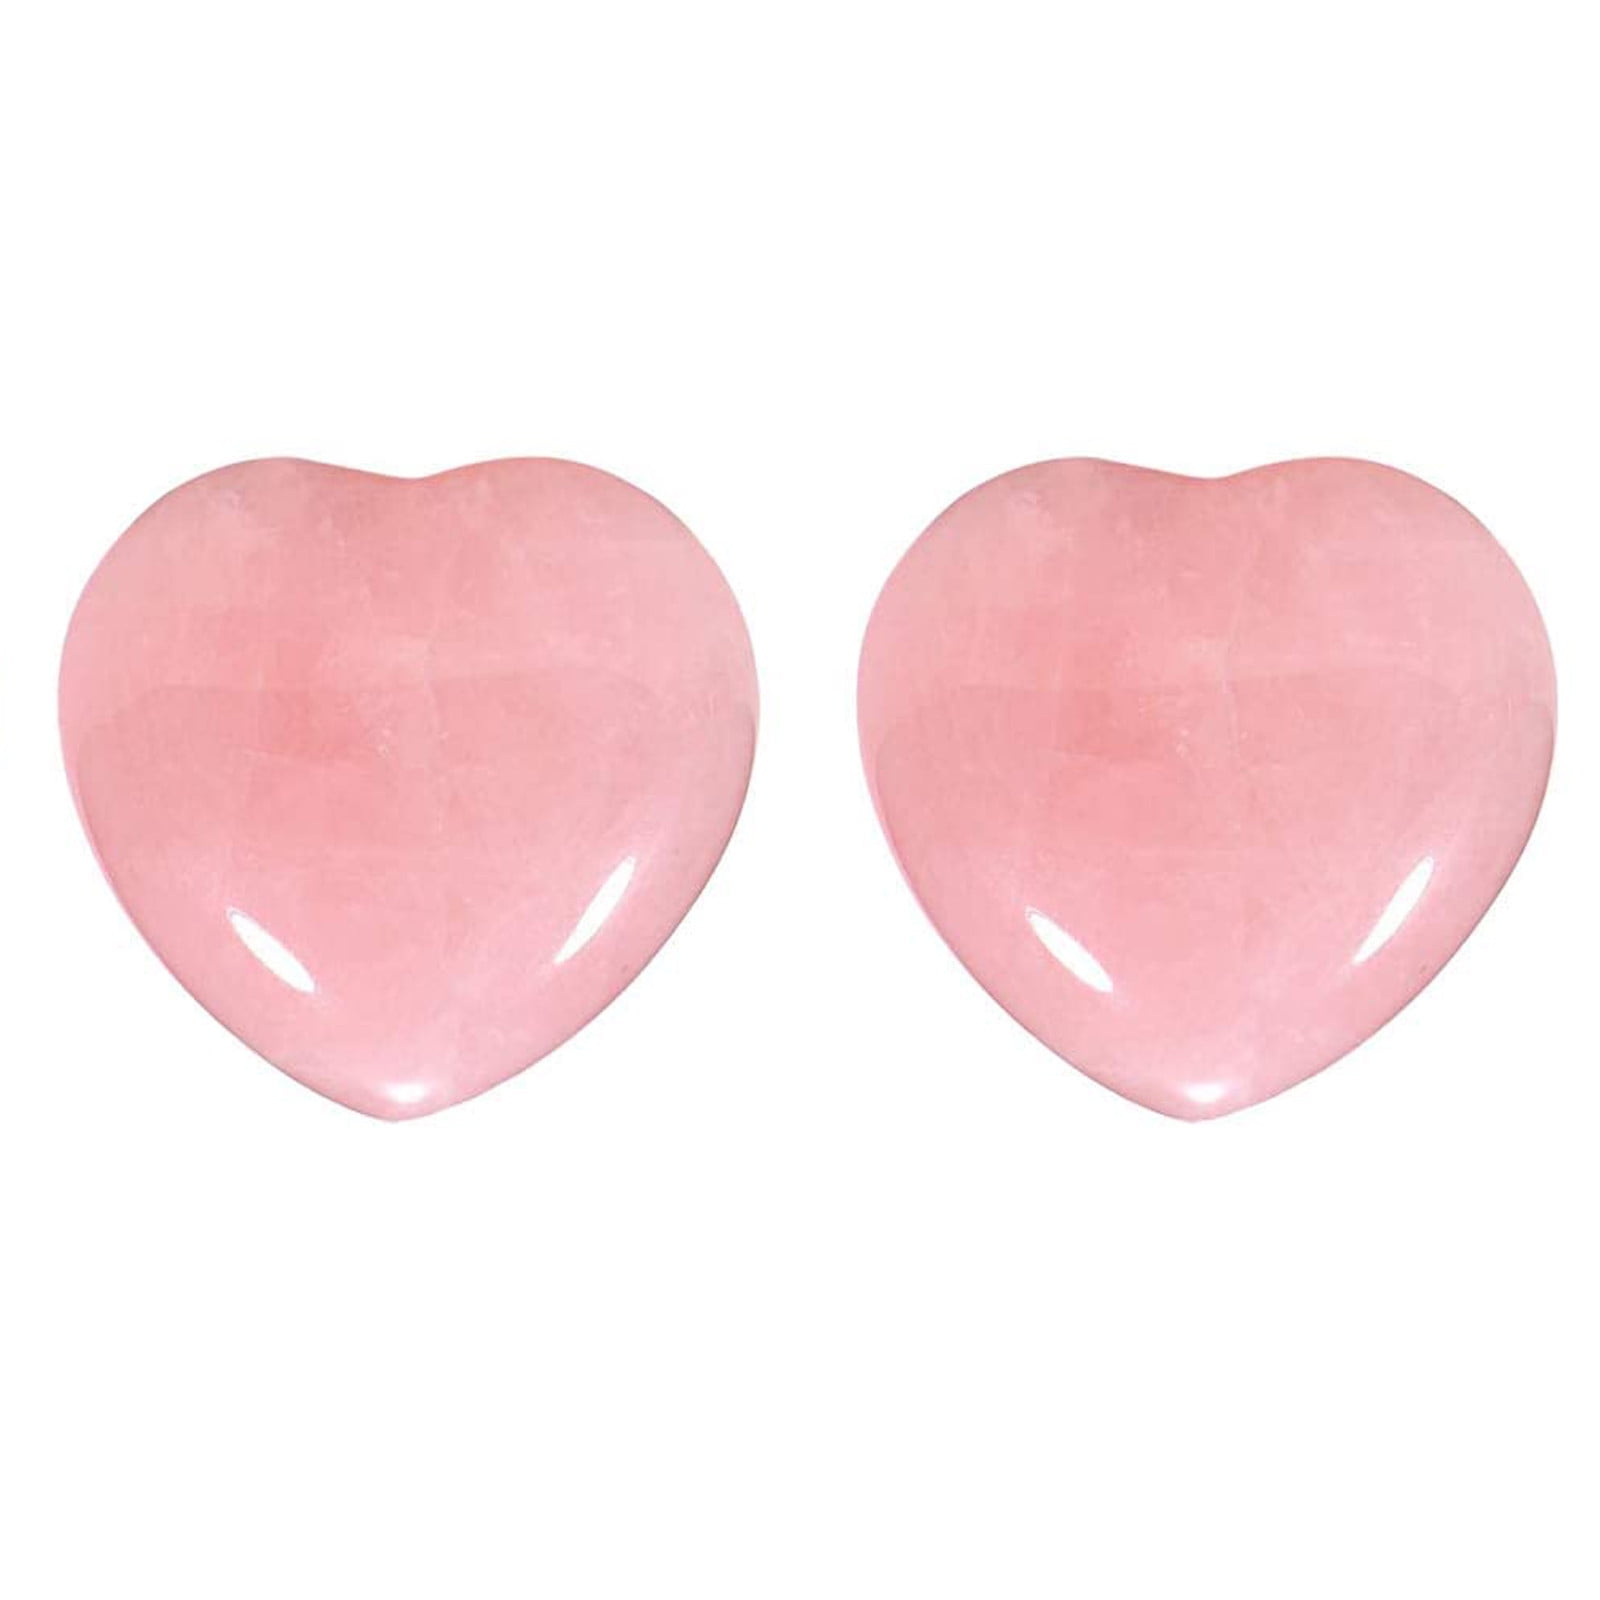 Gorgeous Polished Rose Quartz Heart Crystal Calming Stones for Modern Homes Natural Sleep Aid Fertility Enhancer Heart Shape Stone